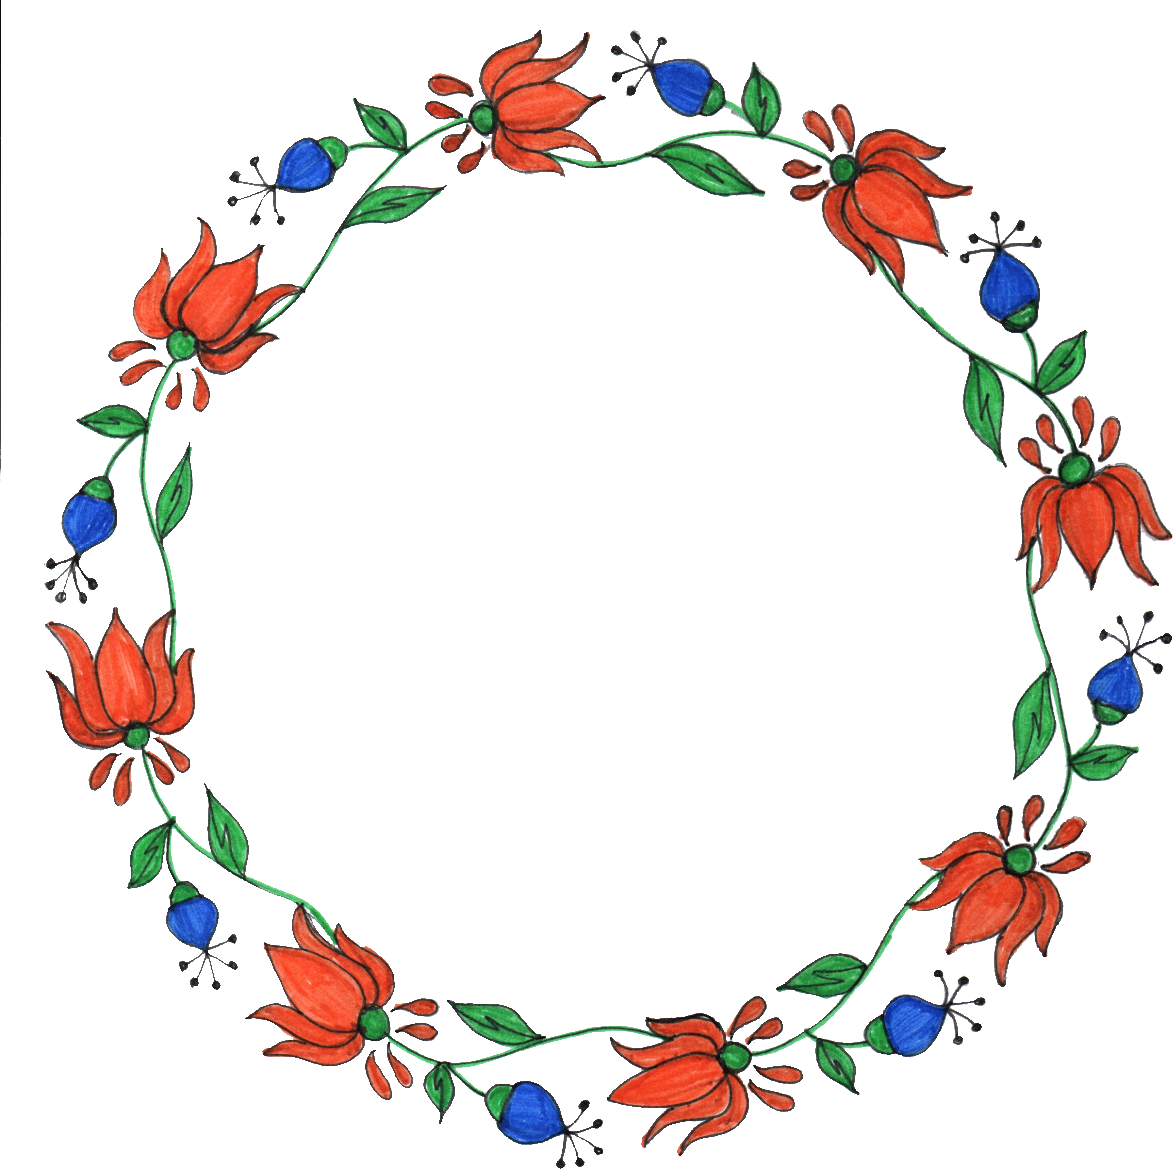 Download PNG image - Drawing Floral Circle Border Frame PNG Image 